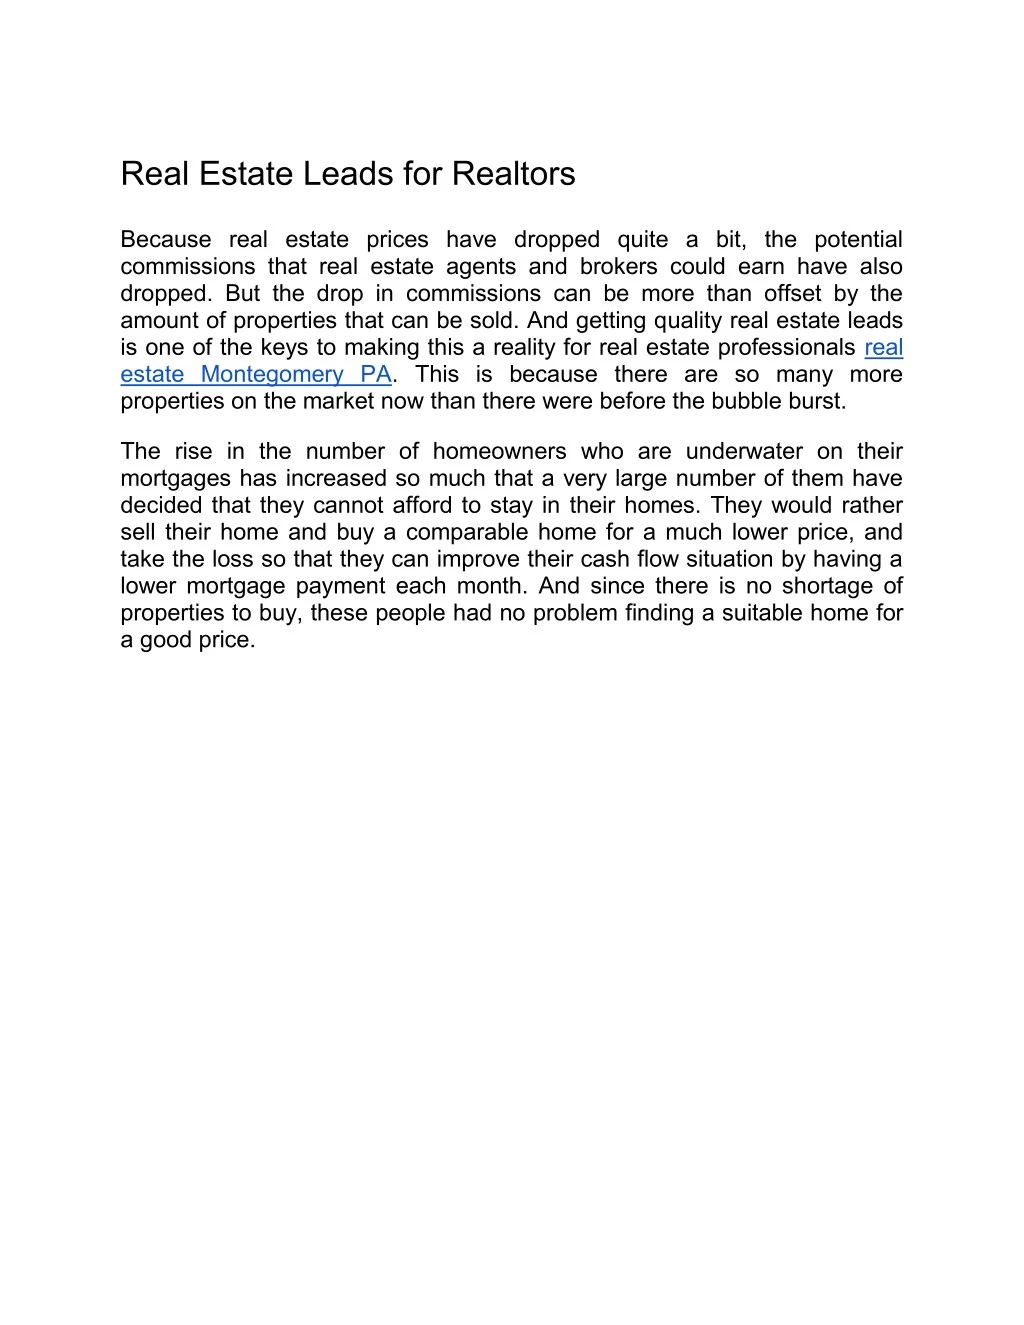 real estate leads for realtors